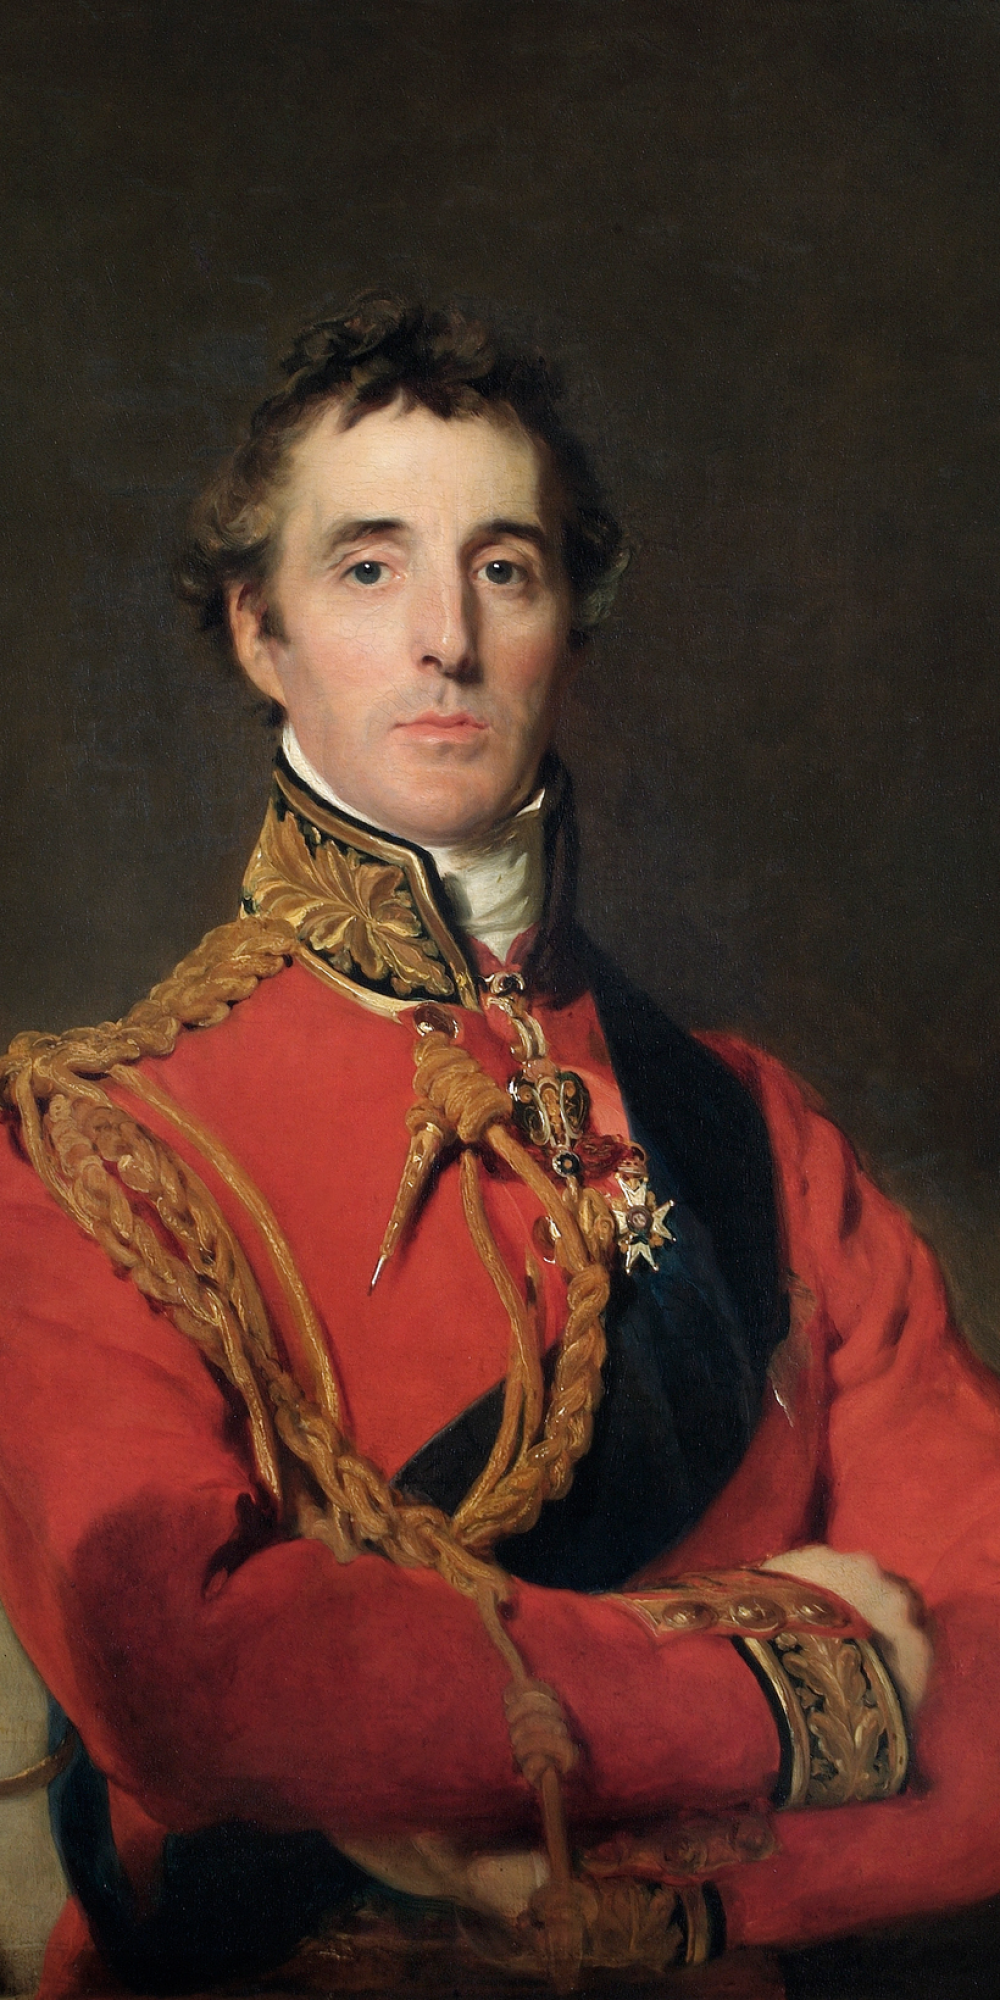 Sir_Arthur_Wellesley,_1st_Duke_of_Wellington